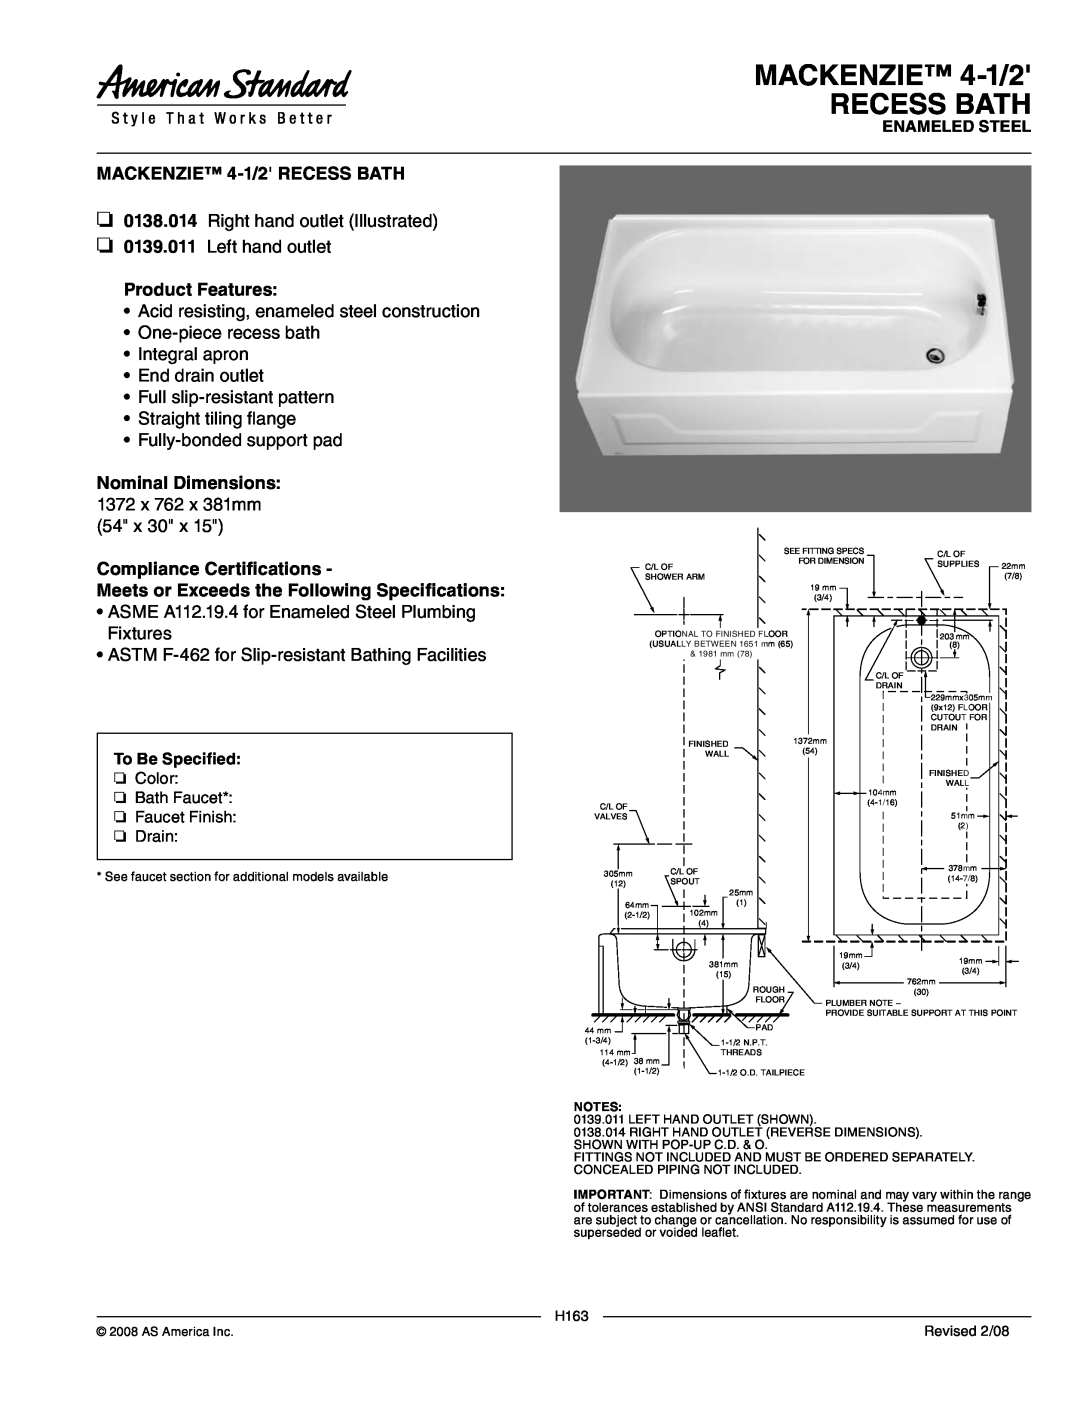 American Standard 0138.014 dimensions MACKENZIE 4-1/2 RECESS BATH, MACKENZIE 4-1/2RECESS BATH, Left hand outlet, H163 